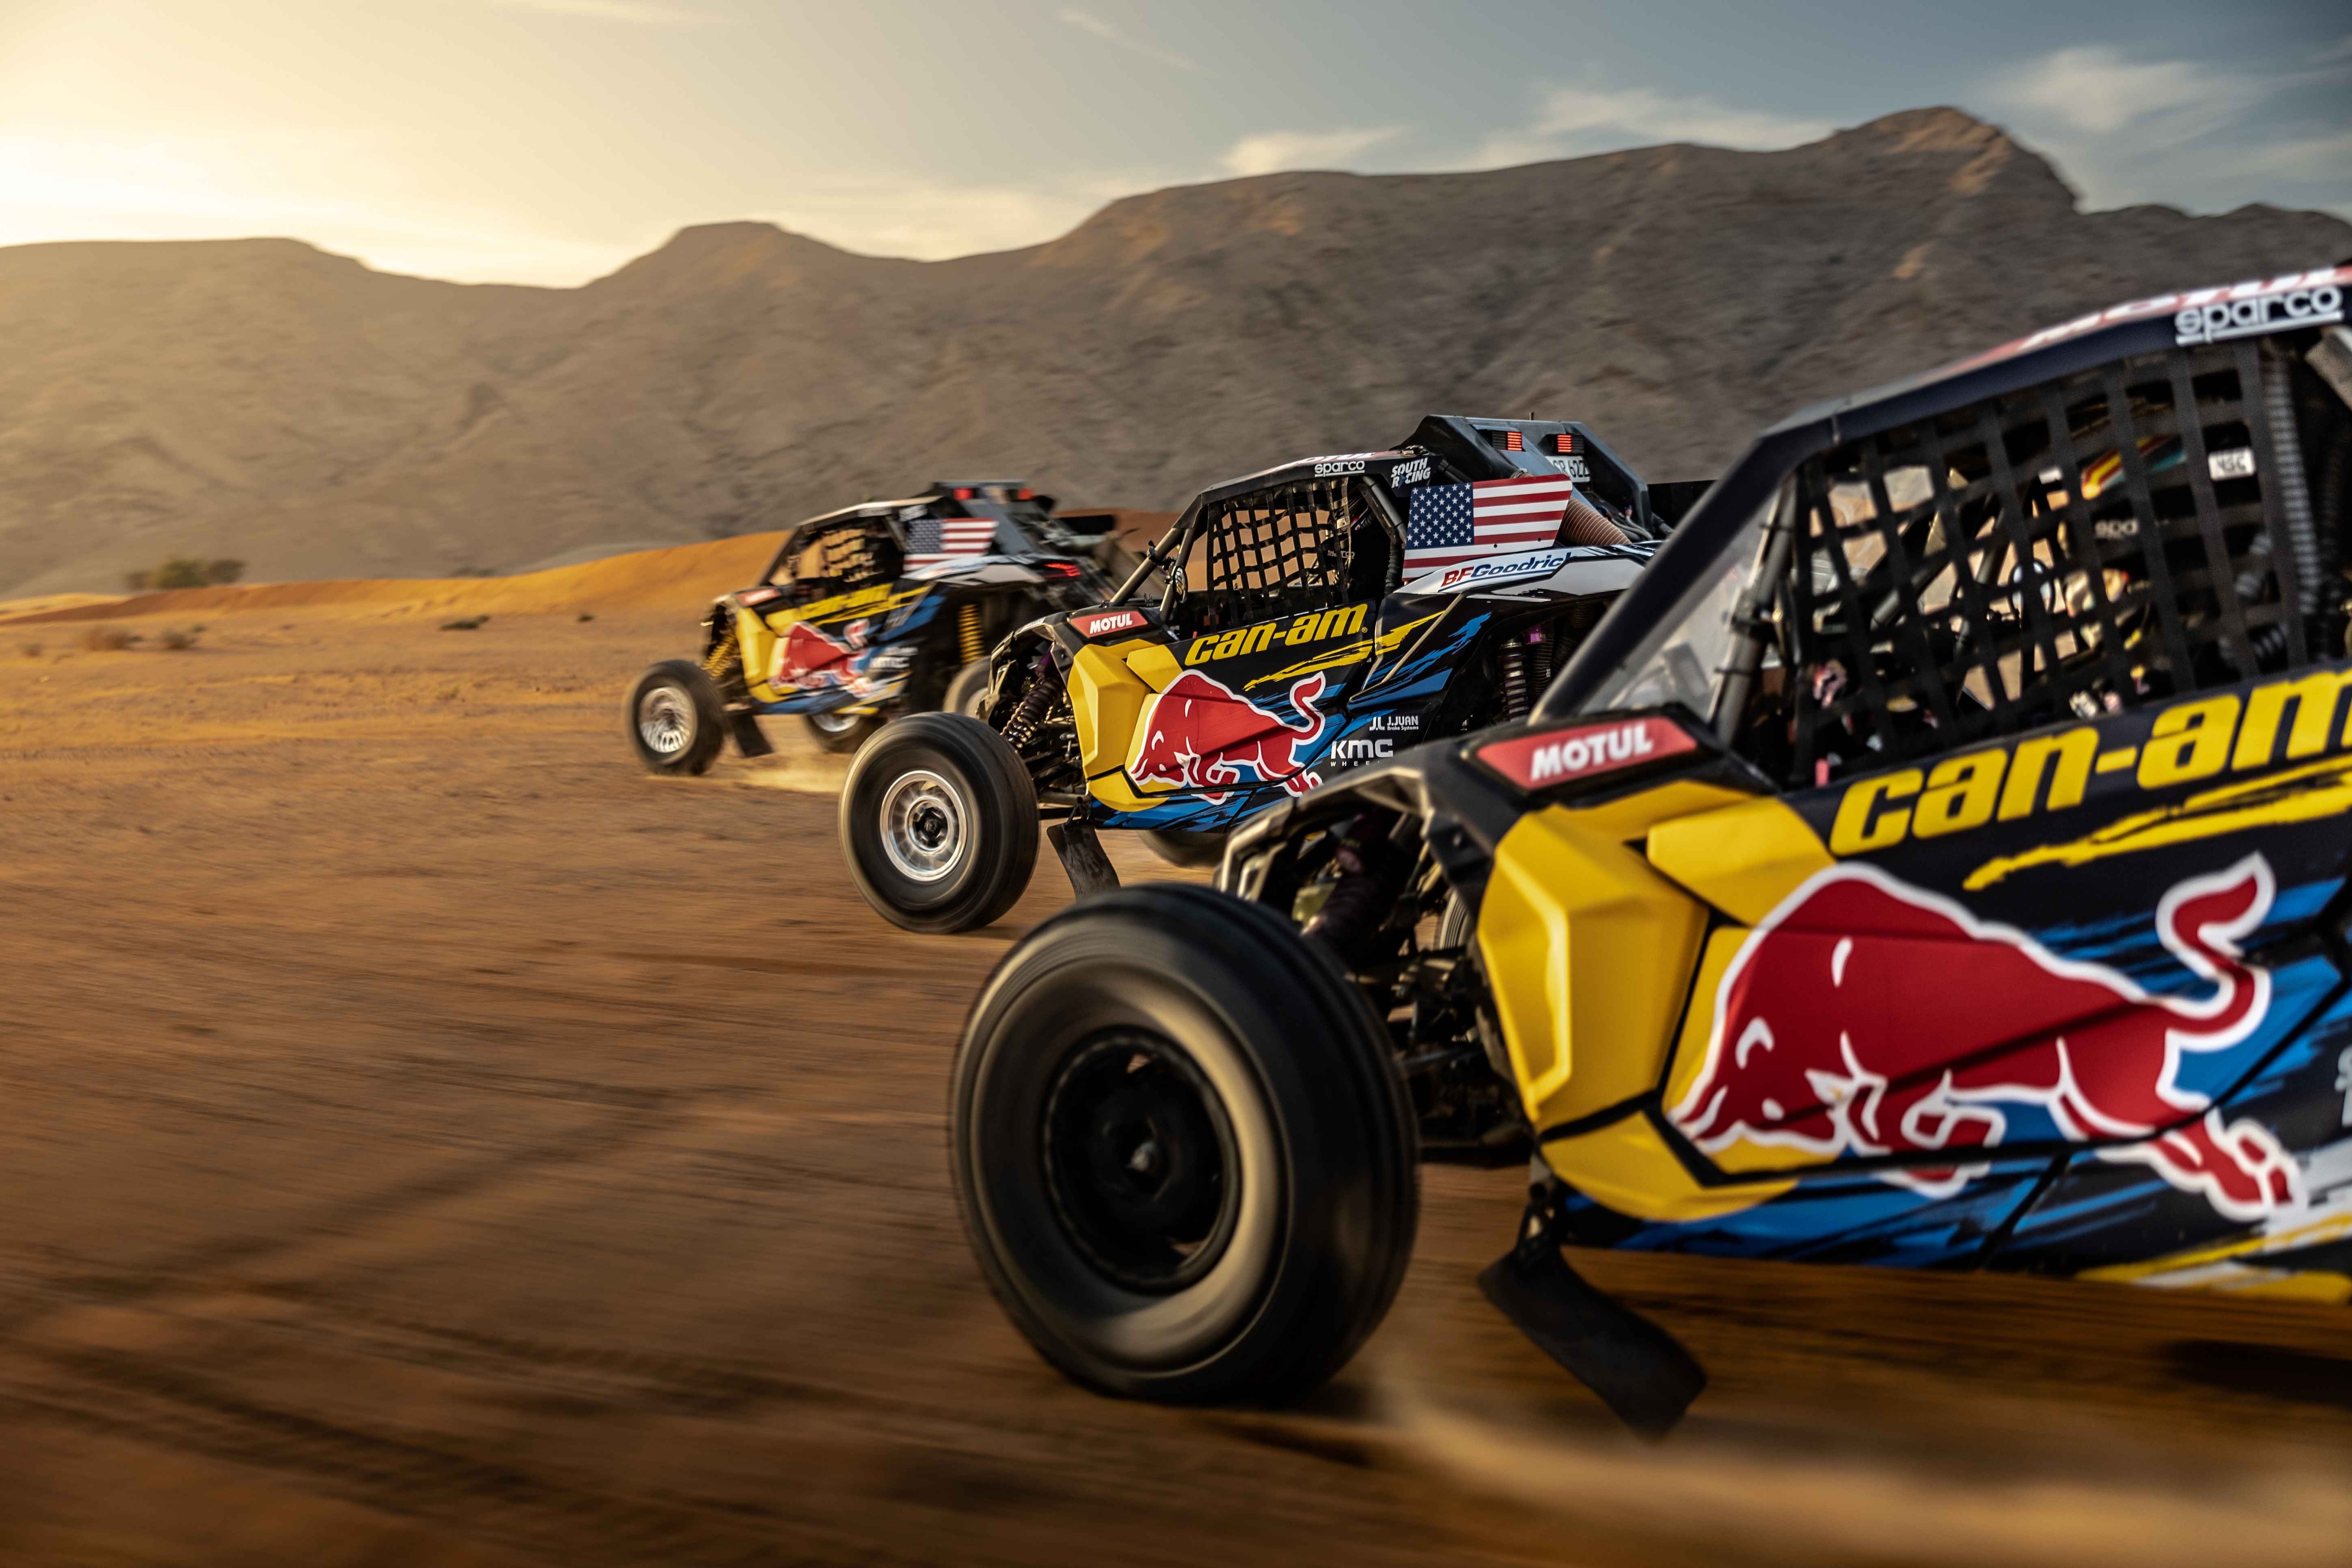 3 Maverick X3 racing in the desert